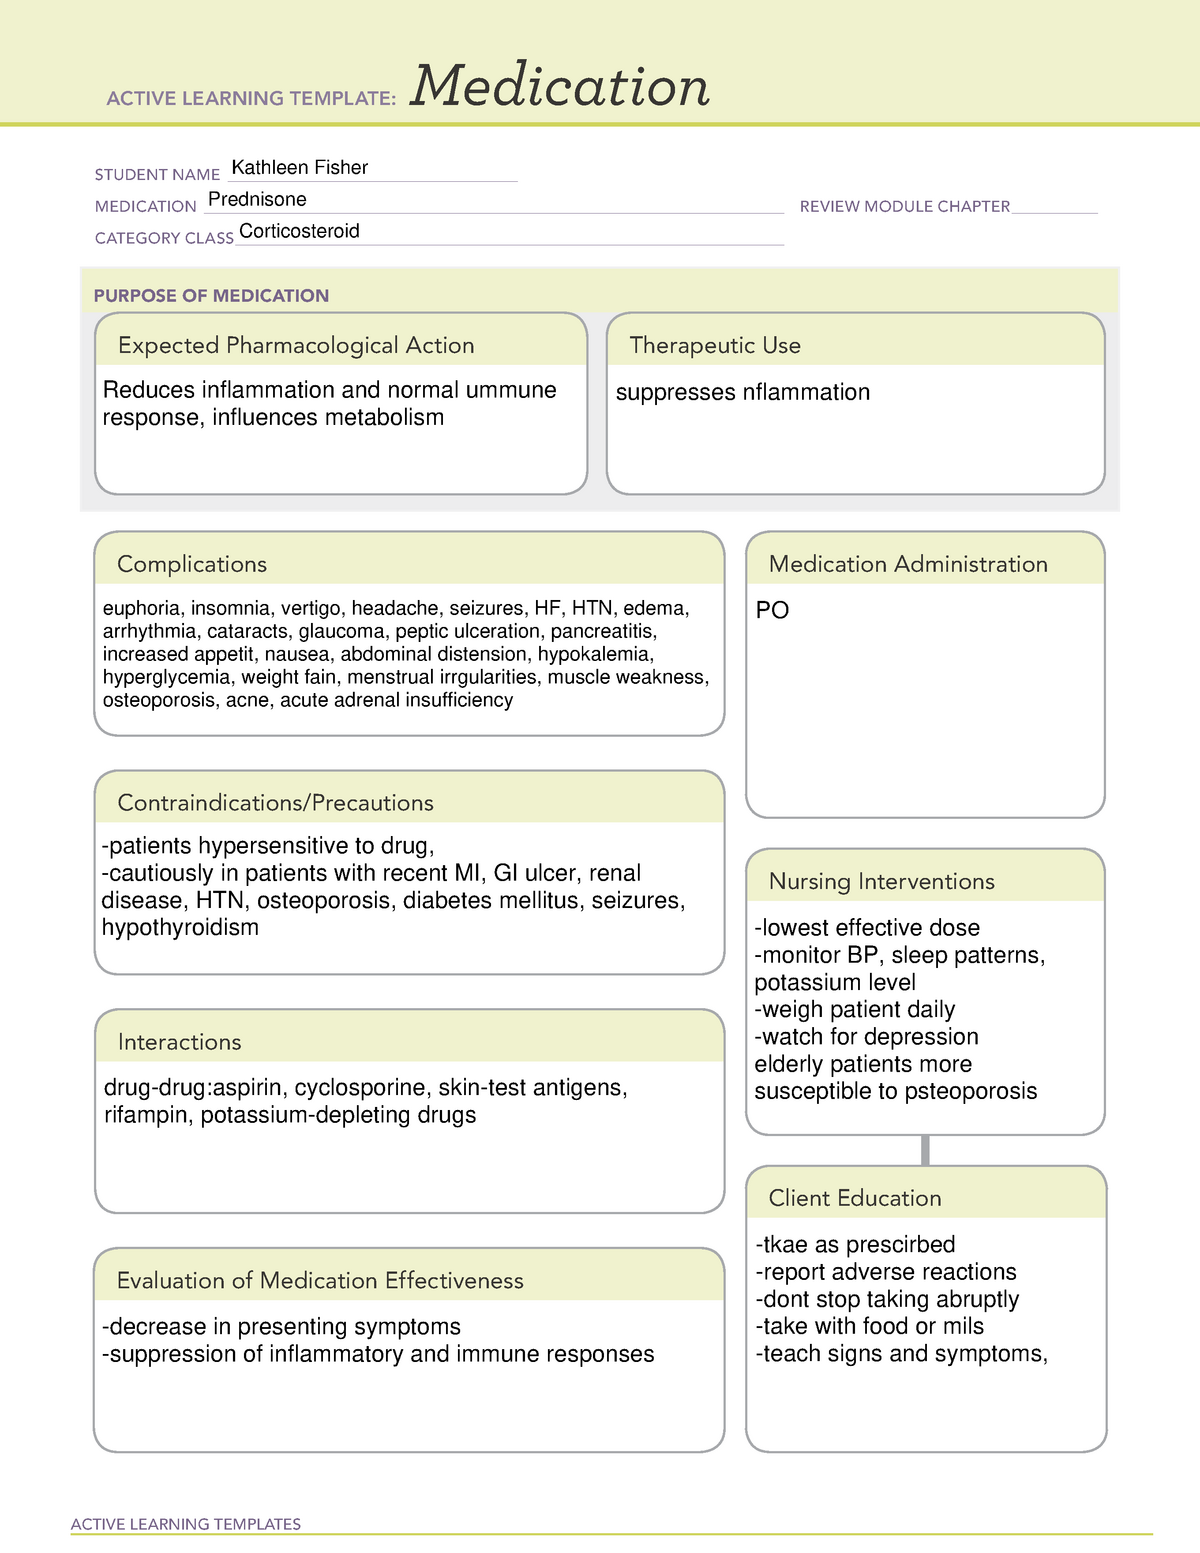 Medtemp prednisone ATI medication/system template ACTIVE LEARNING